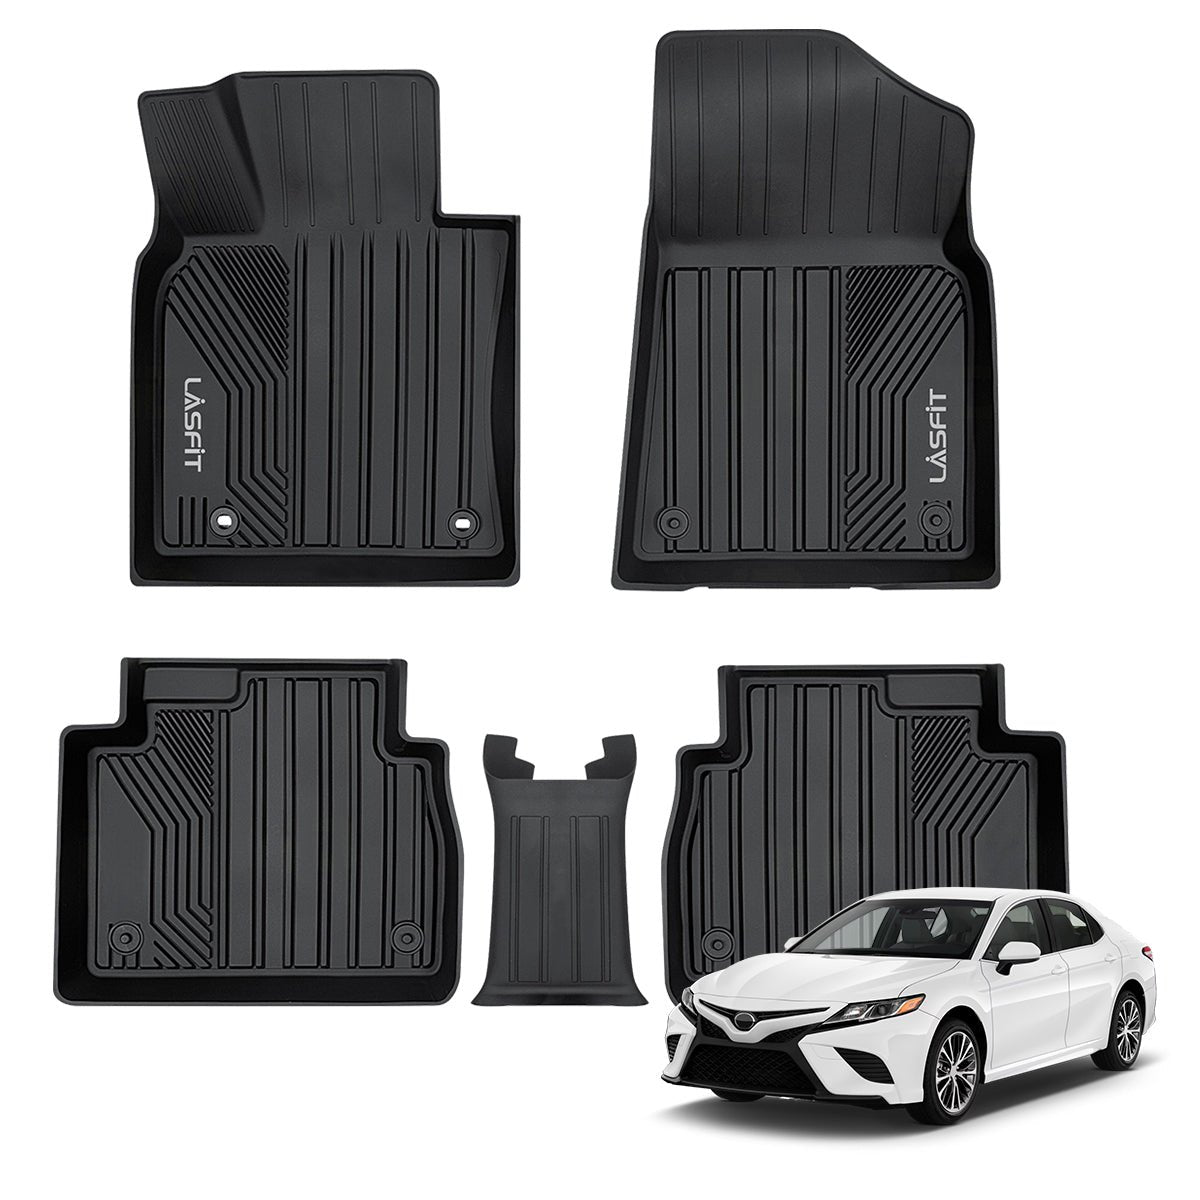 For Sedan/Coupe/Hatchback – LASFIT LINERS